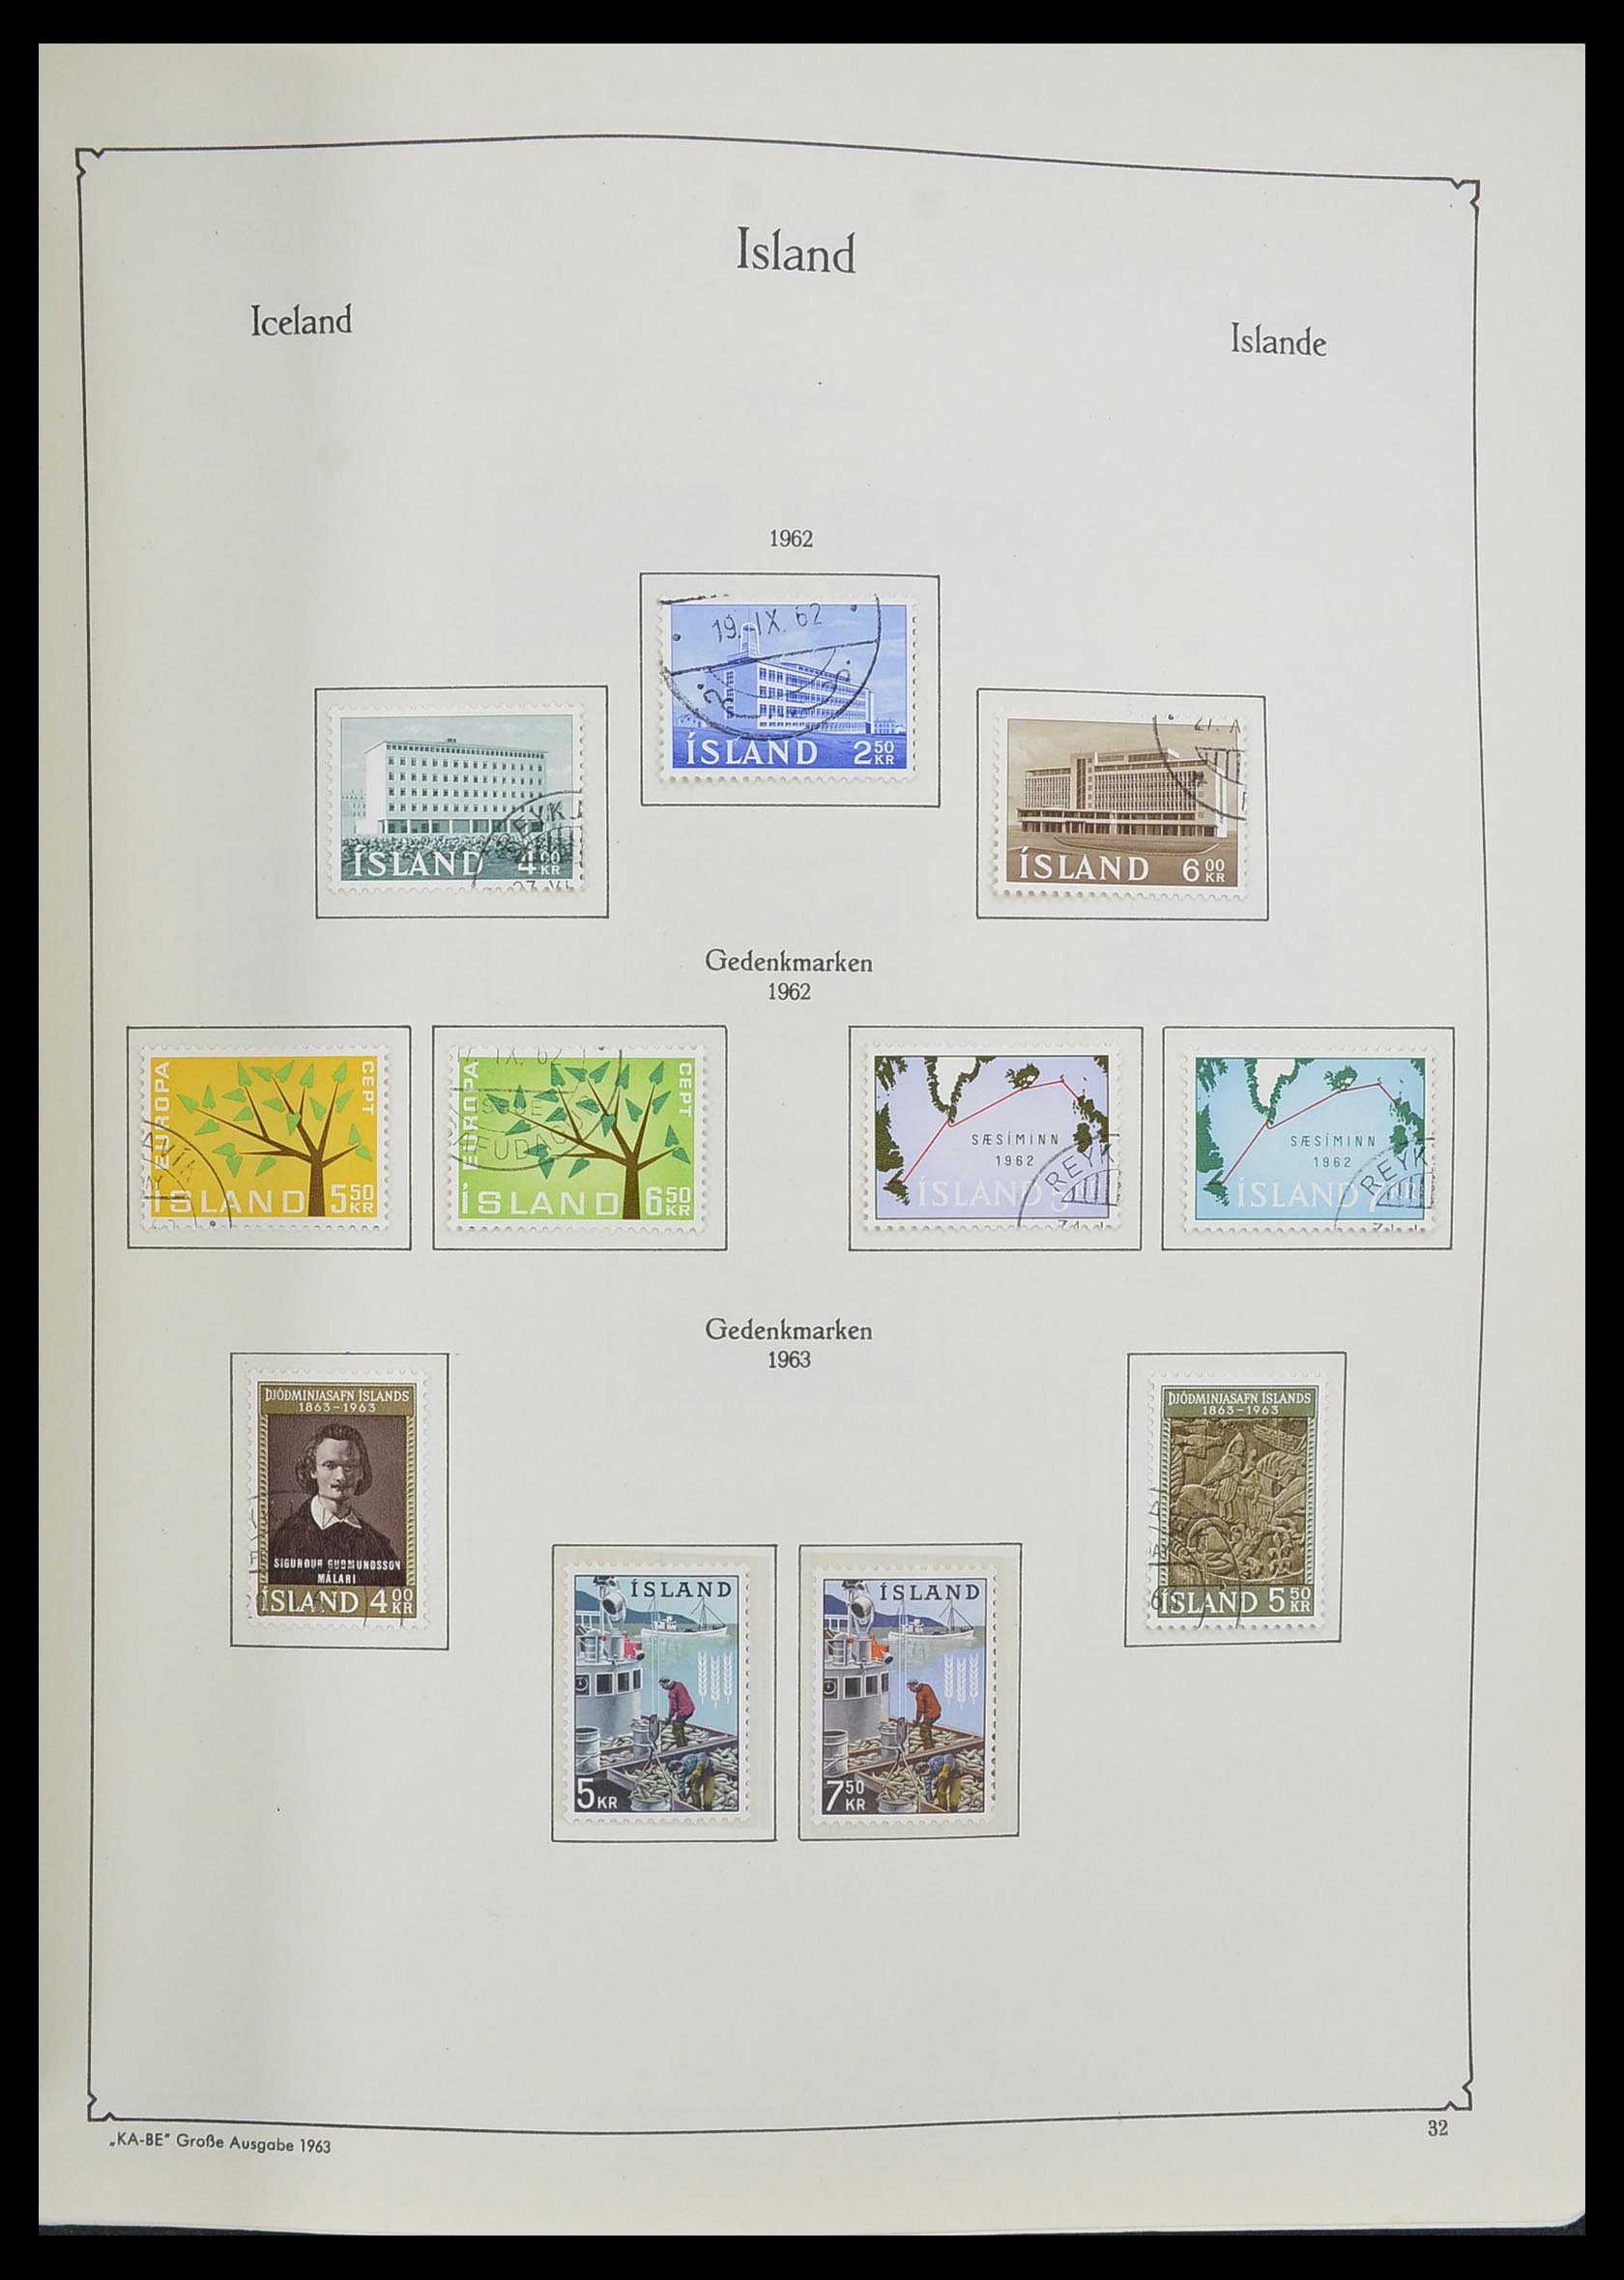 33379 088 - Stamp collection 33379 Scandinavia 1856-1972.